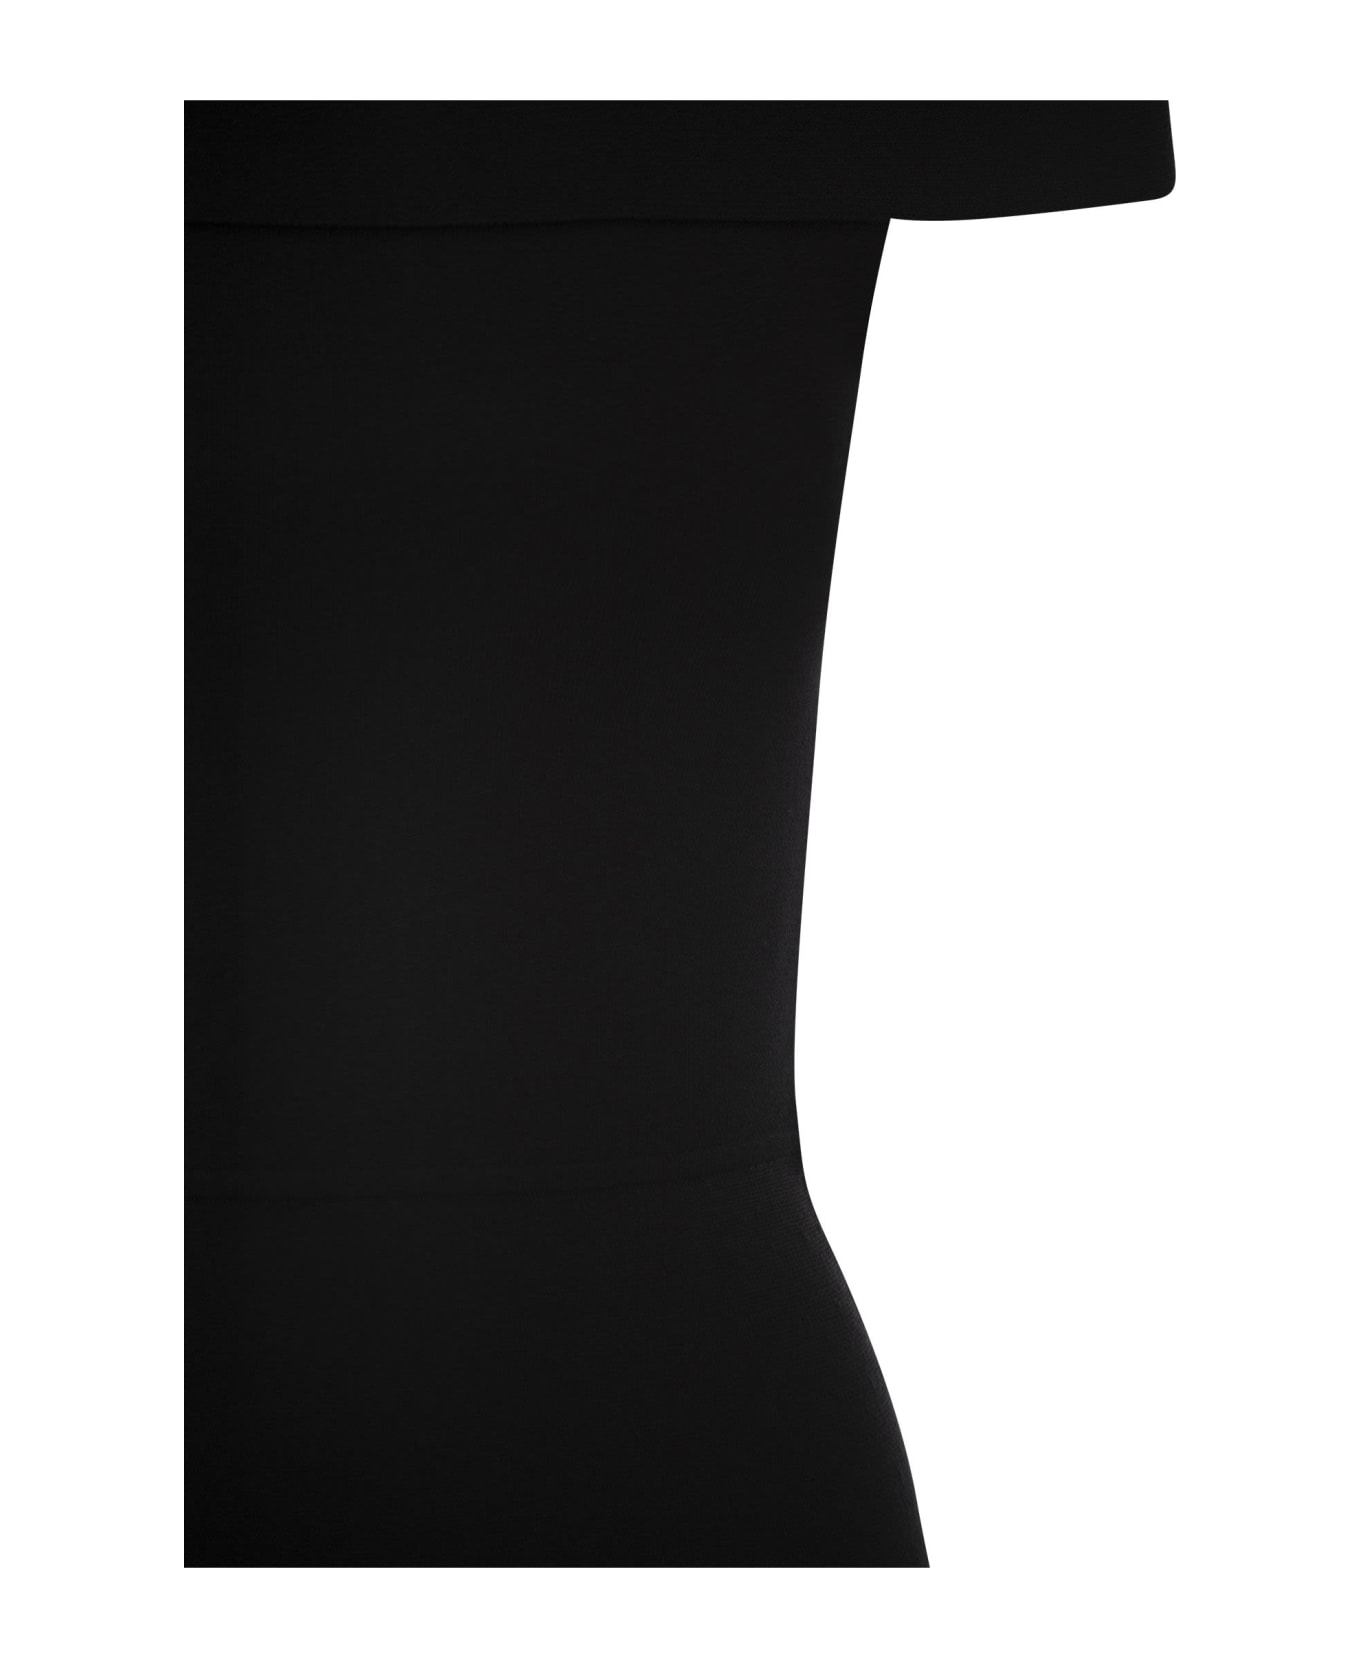 Fabiana Filippi Midi Dress With Straight Neckline - Black